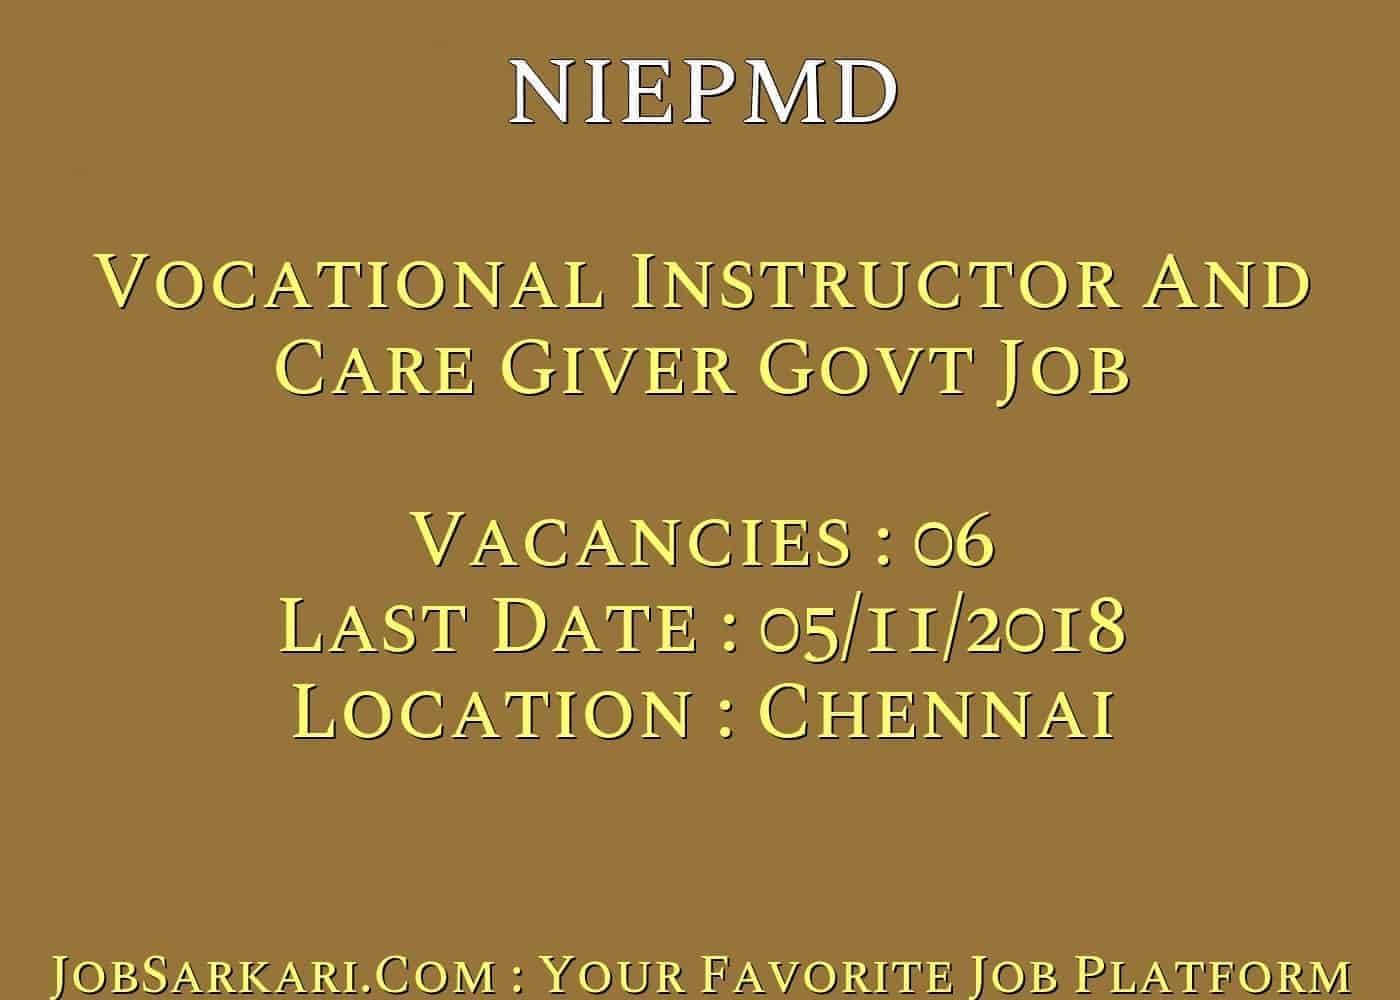 NIEPMD Recruitment 2018 For Vocational Instructor And Care Giver Govt Job